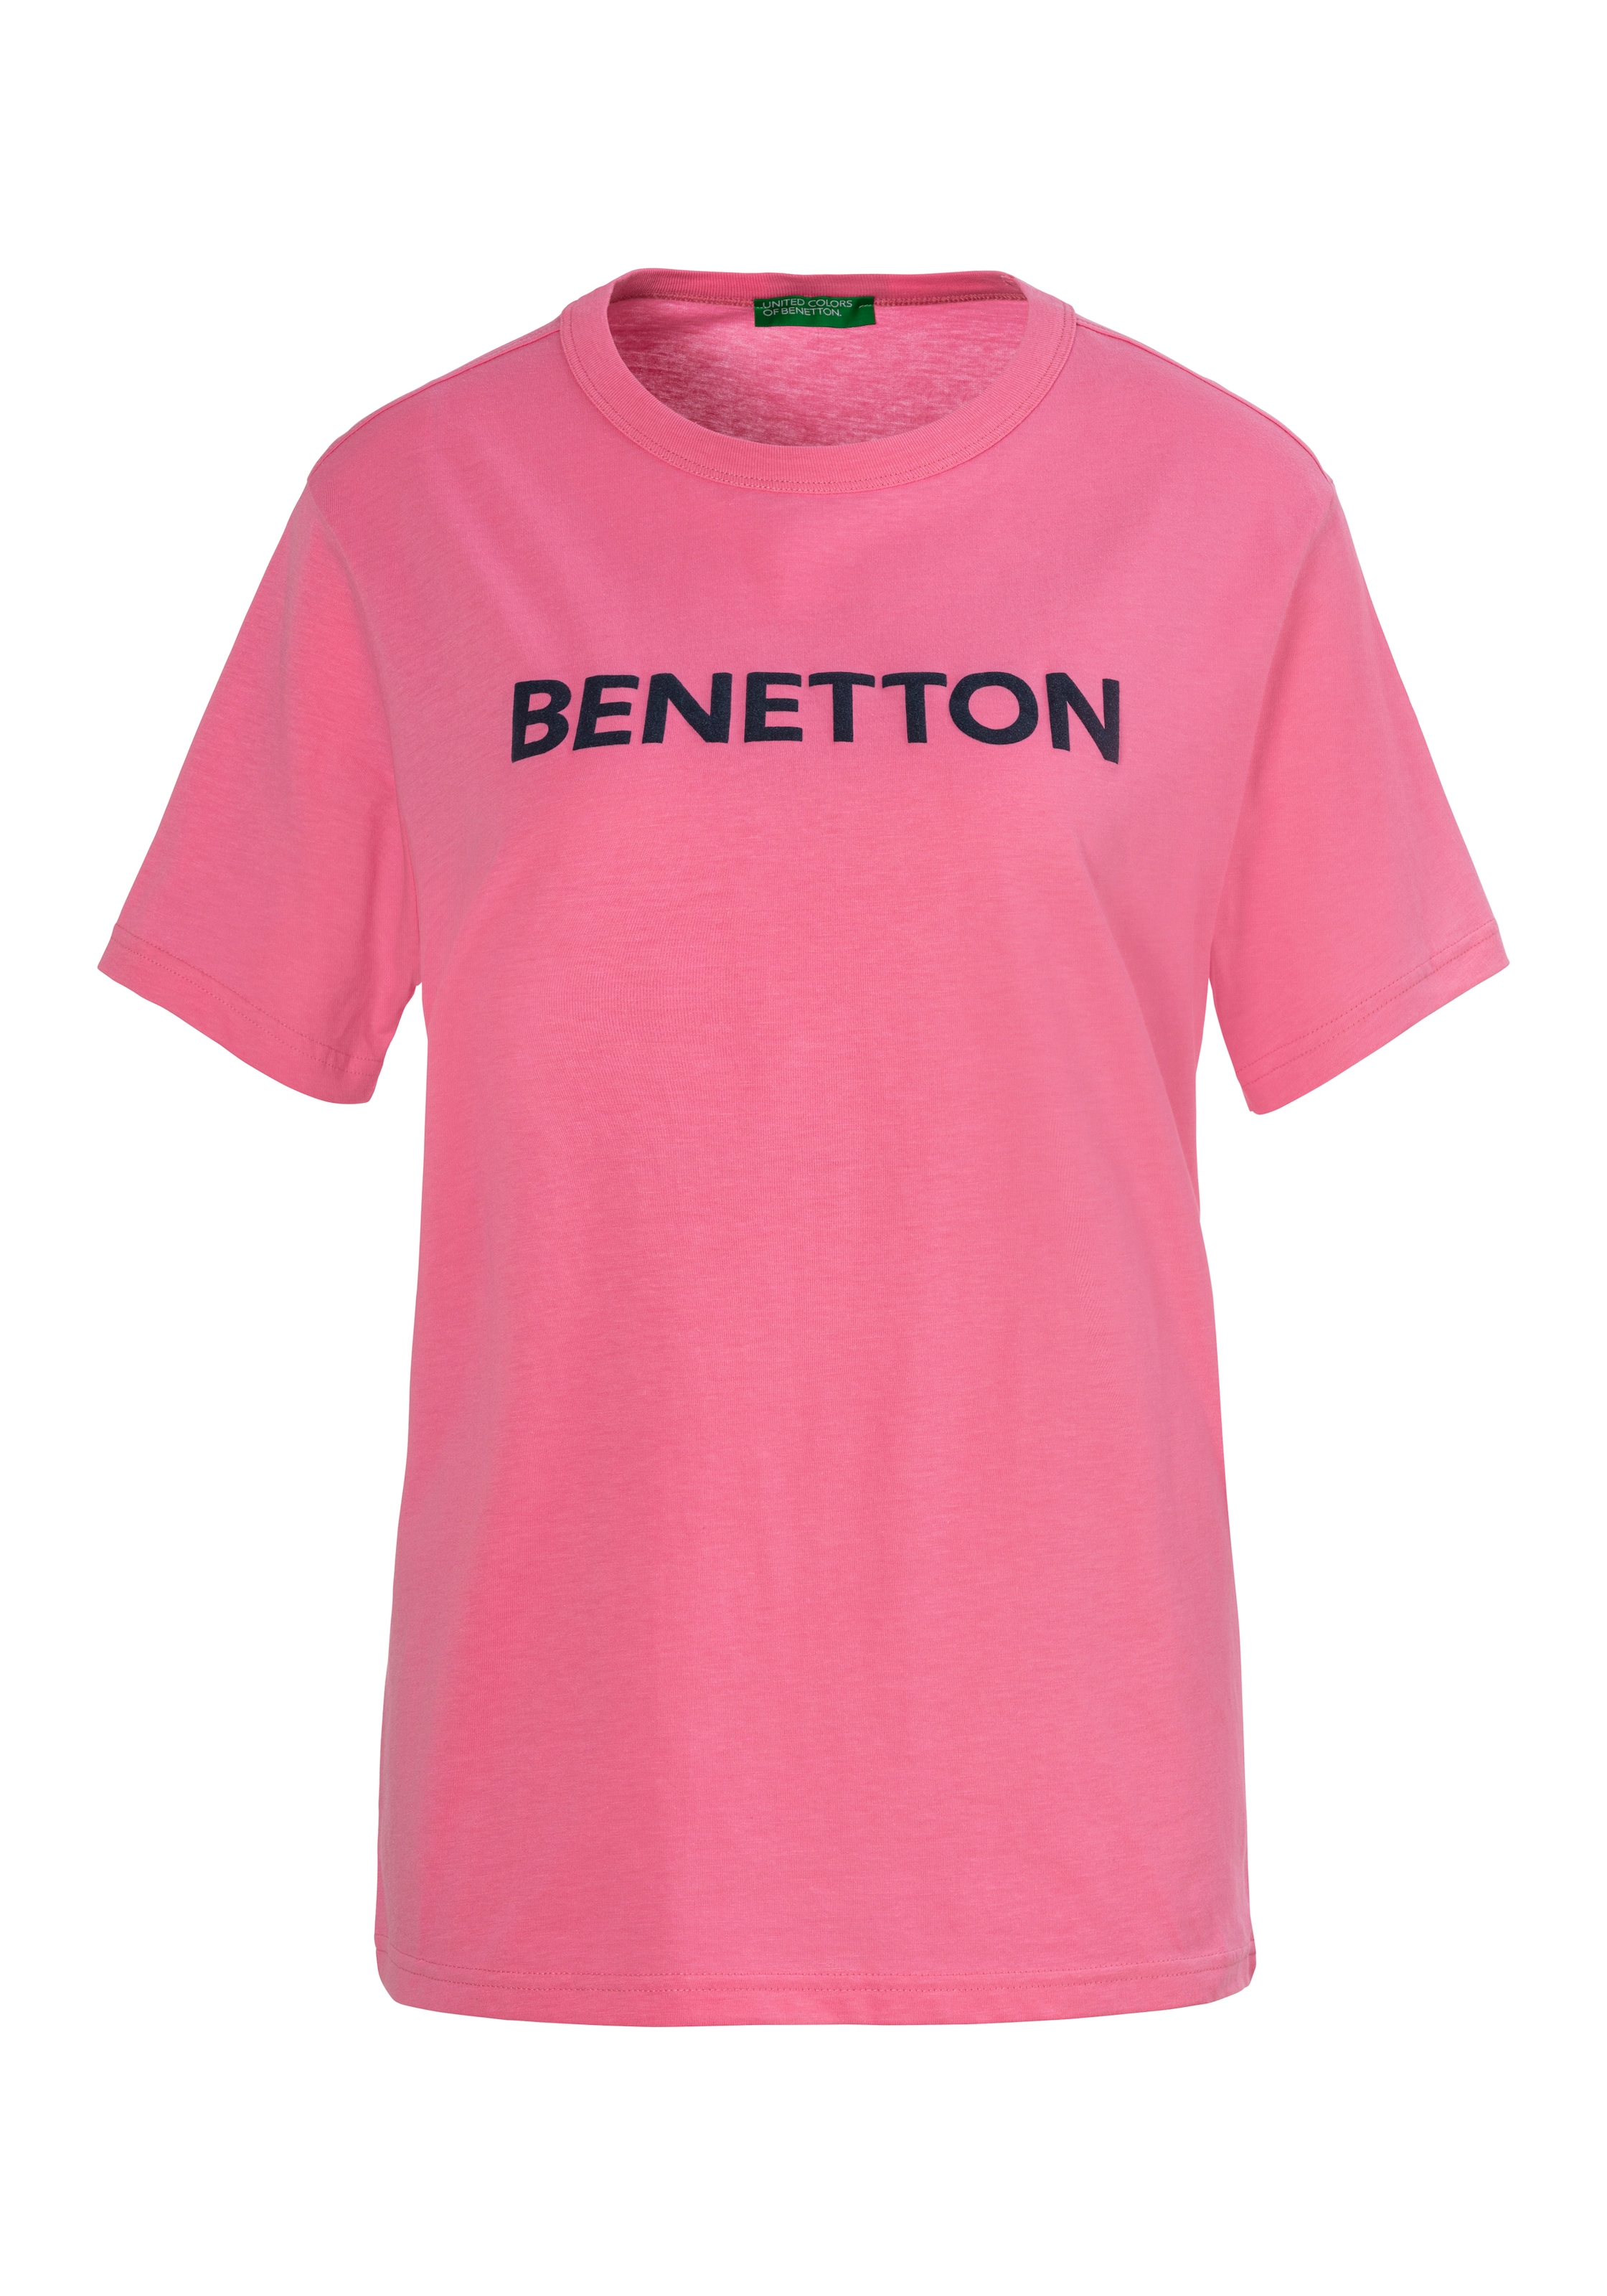 shoppen online Benetton Benetton of United mit Colors T-Shirt, Aufdruck